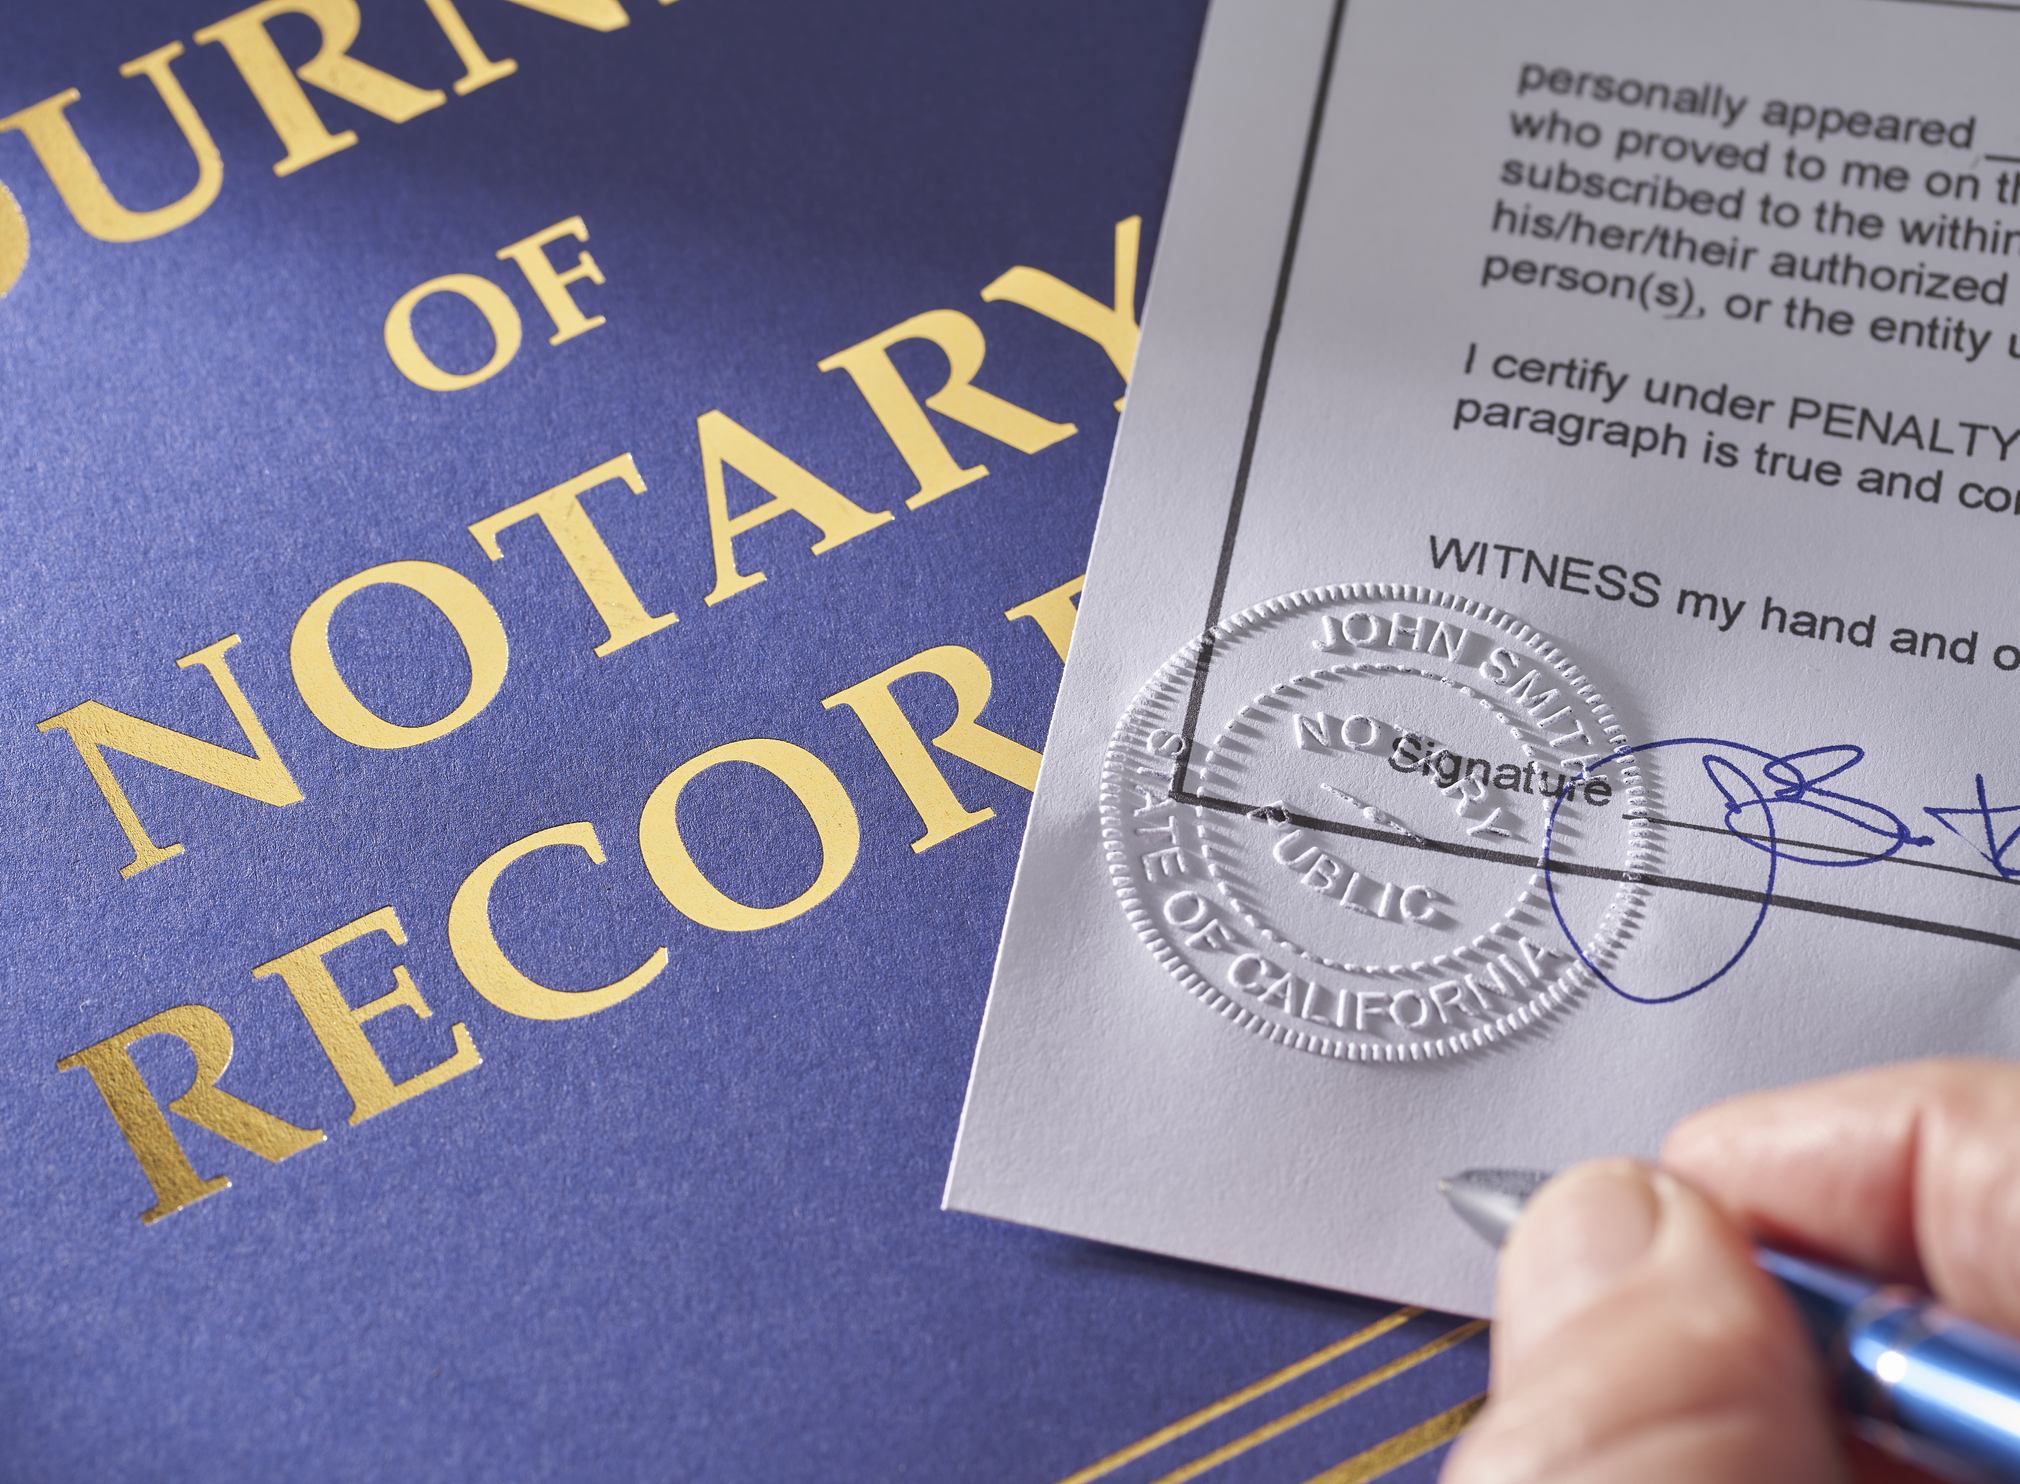 notary wording notarization signature